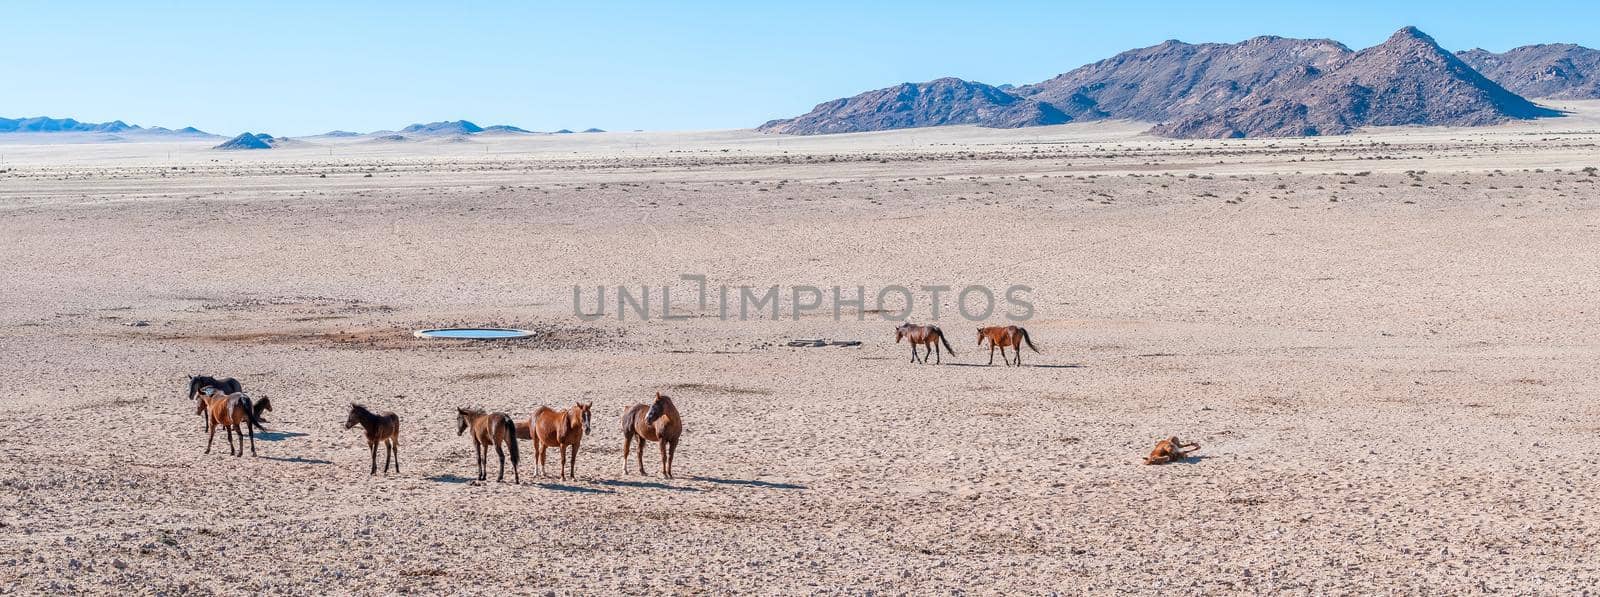 Panoramic view of wild horses of the Namib at Garub by dpreezg